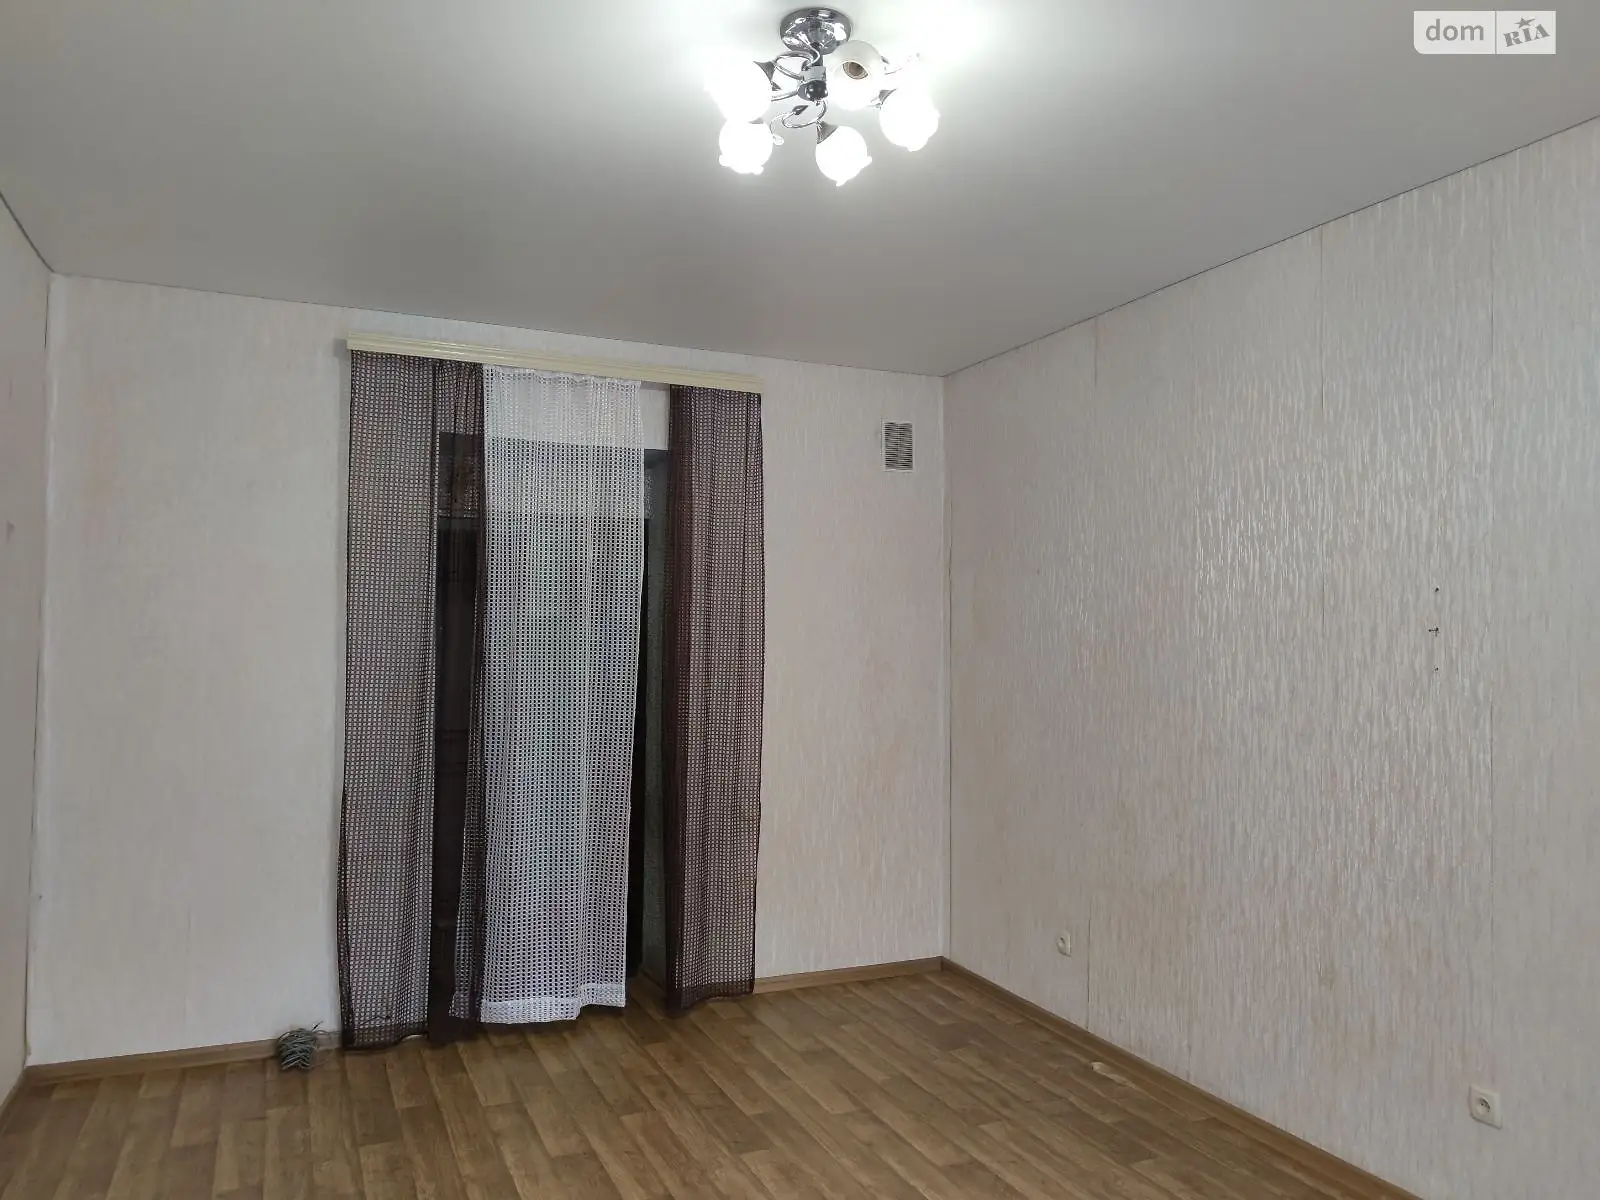 Продается комната 19 кв. м в Одессе, цена: 9000 $ - фото 1